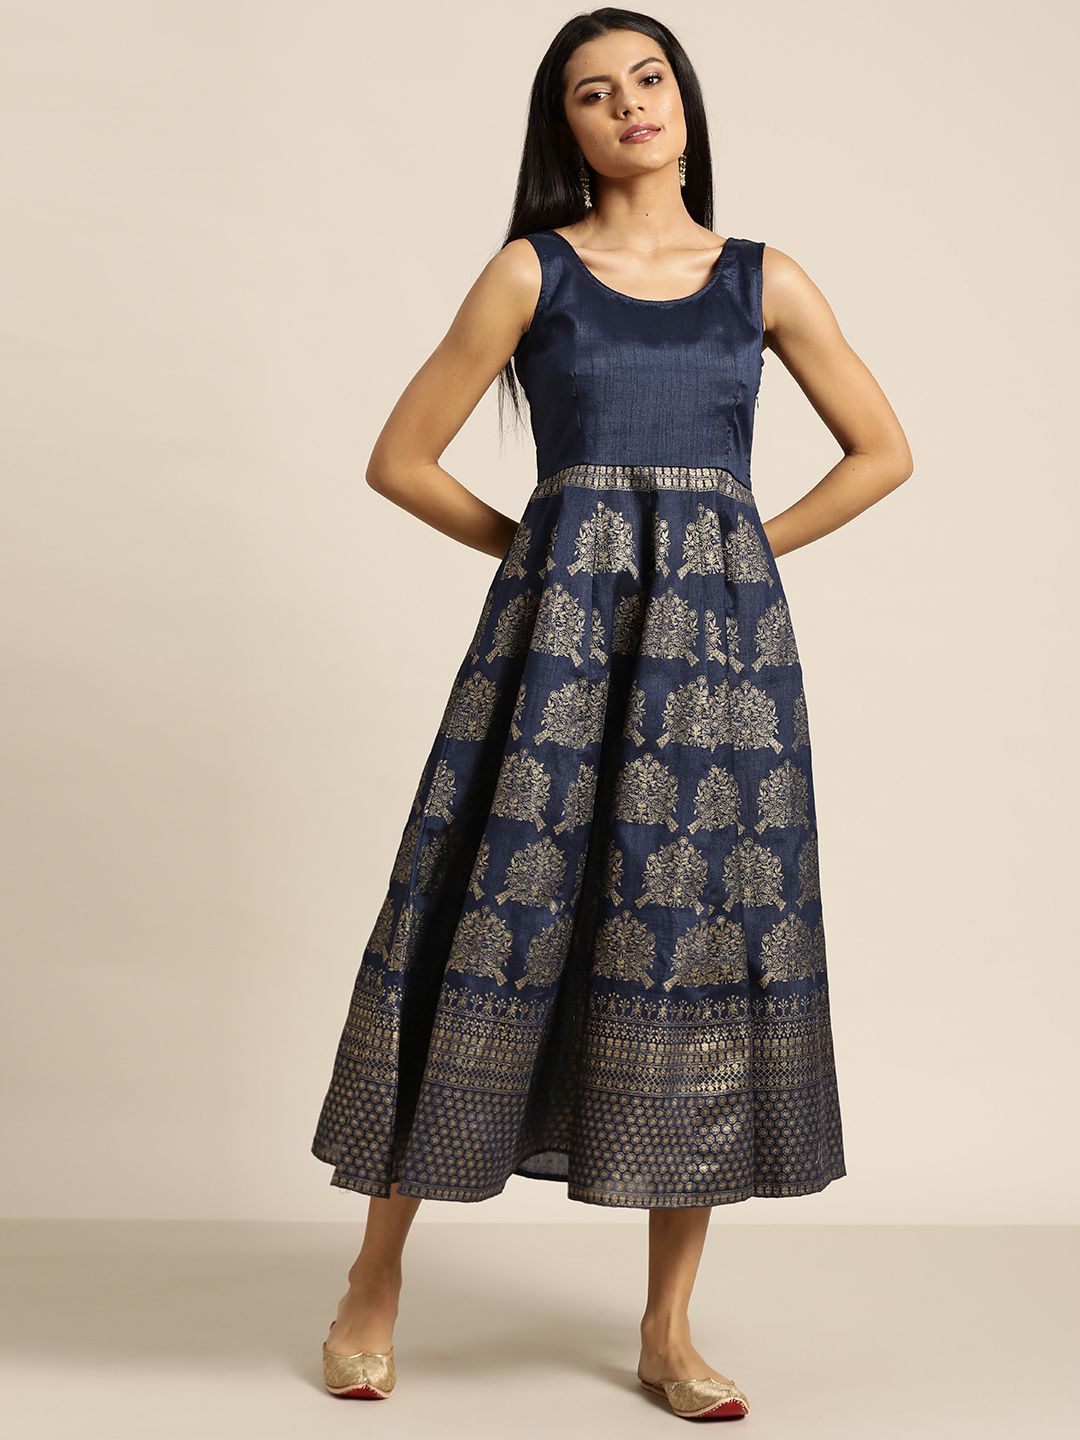 Shae by SASSAFRAS Navy Blue & Golden Foil Print Sleeveless Midi Ethnic Dress Price in India